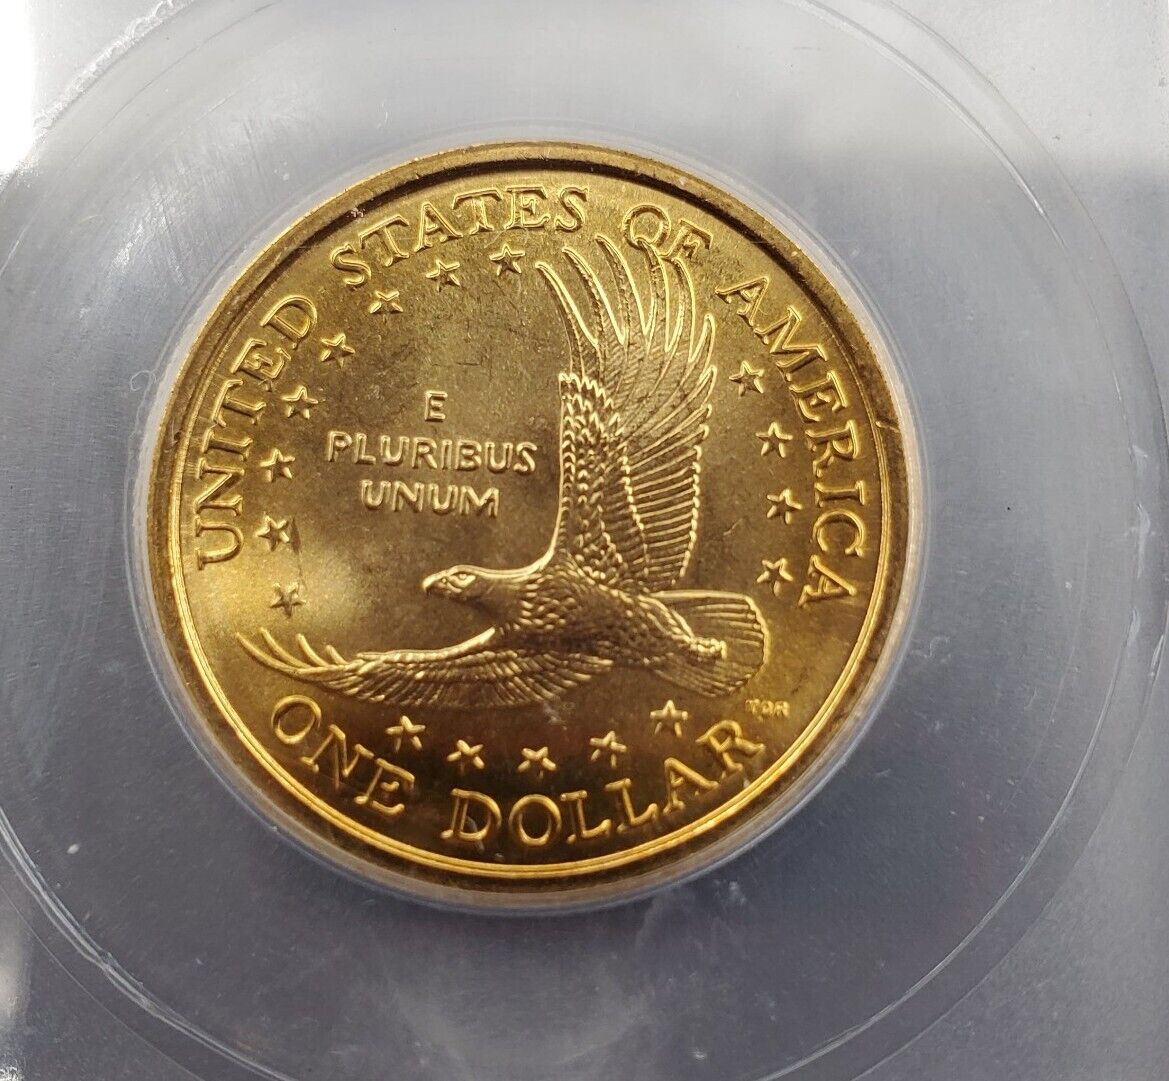 2003 P Sacagawea Native American Dollar COIN ICG MS67 Gem BU UNC Certified